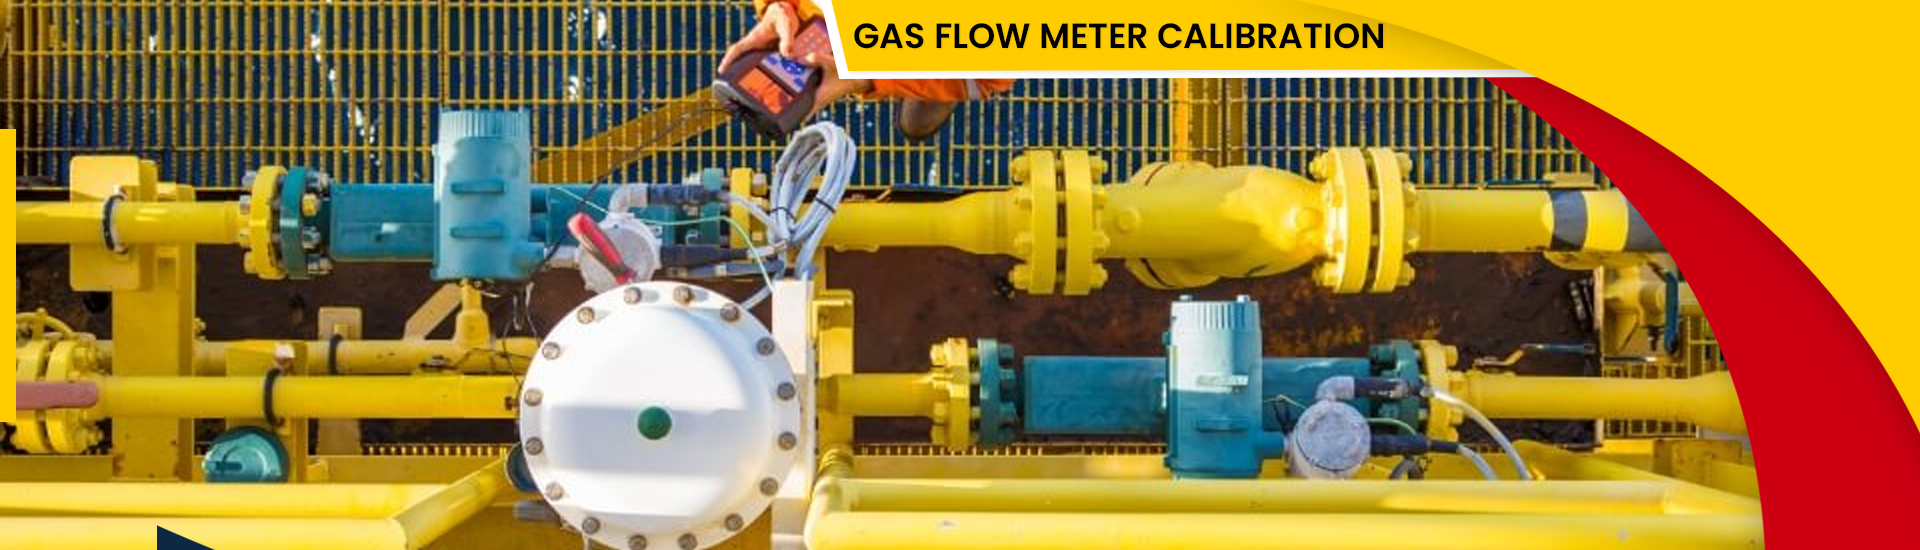 Gas Flow Meter Calibration